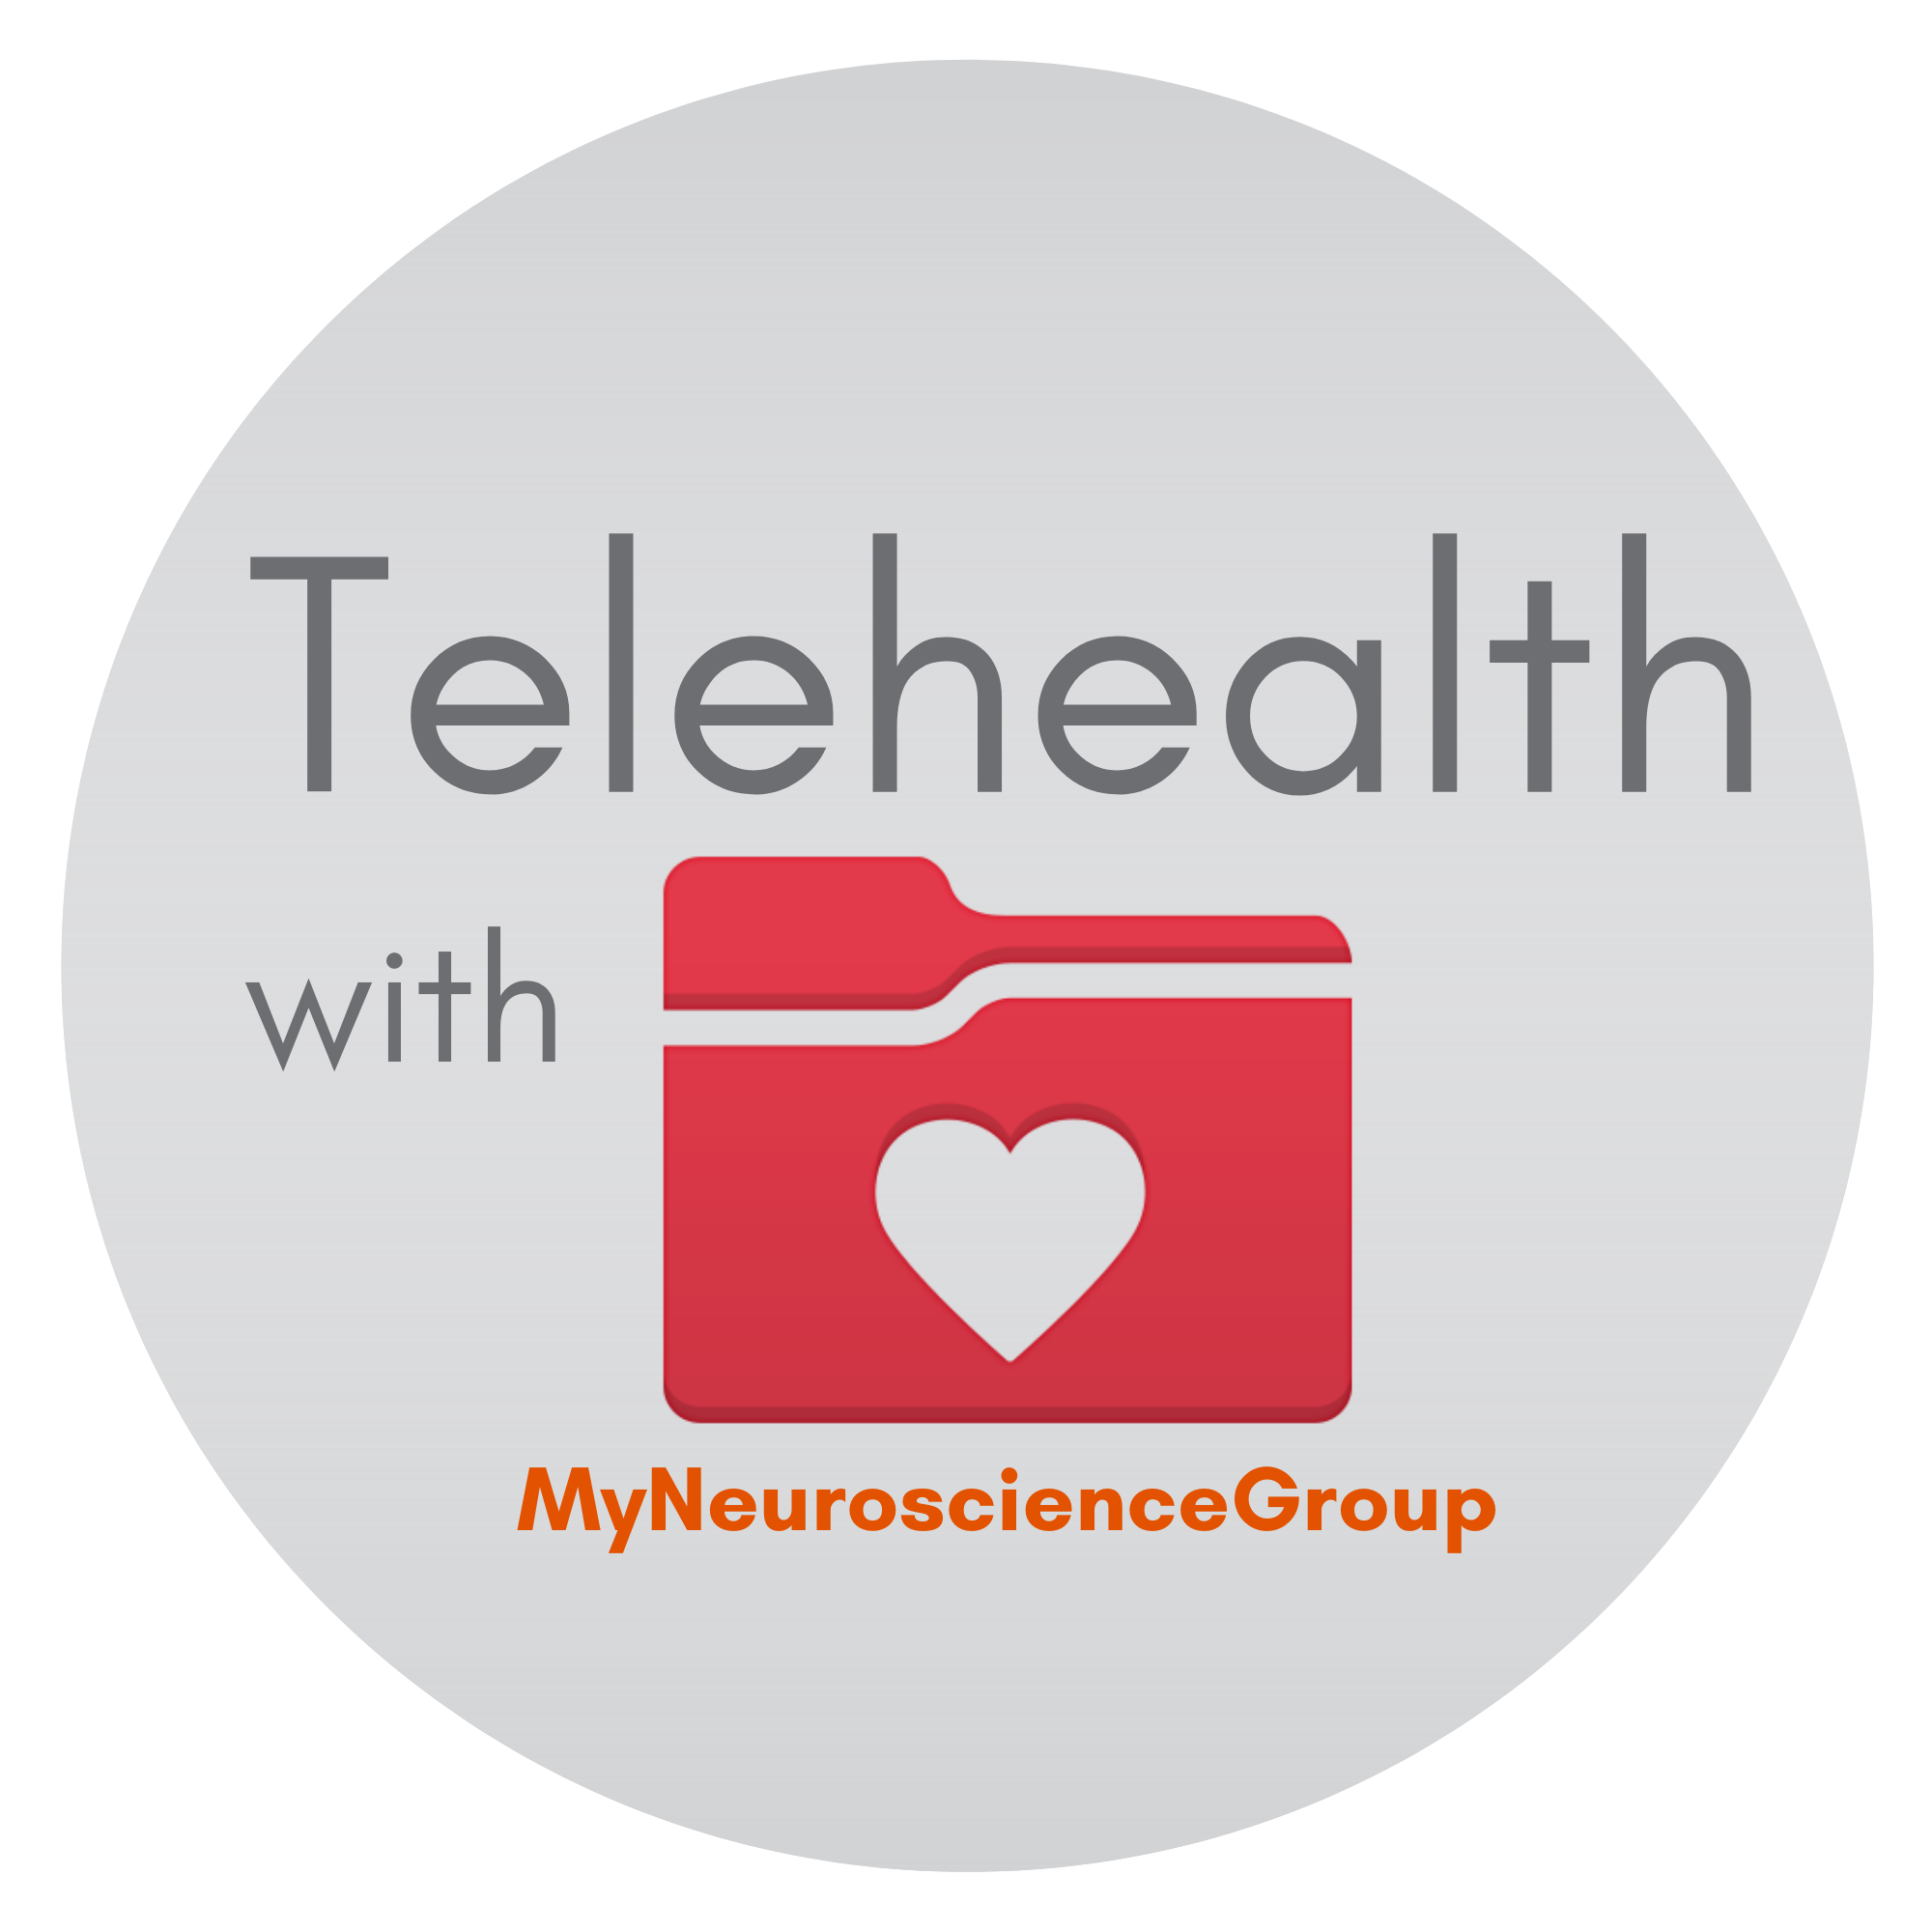 MyNeuroscience Group telehealth badge